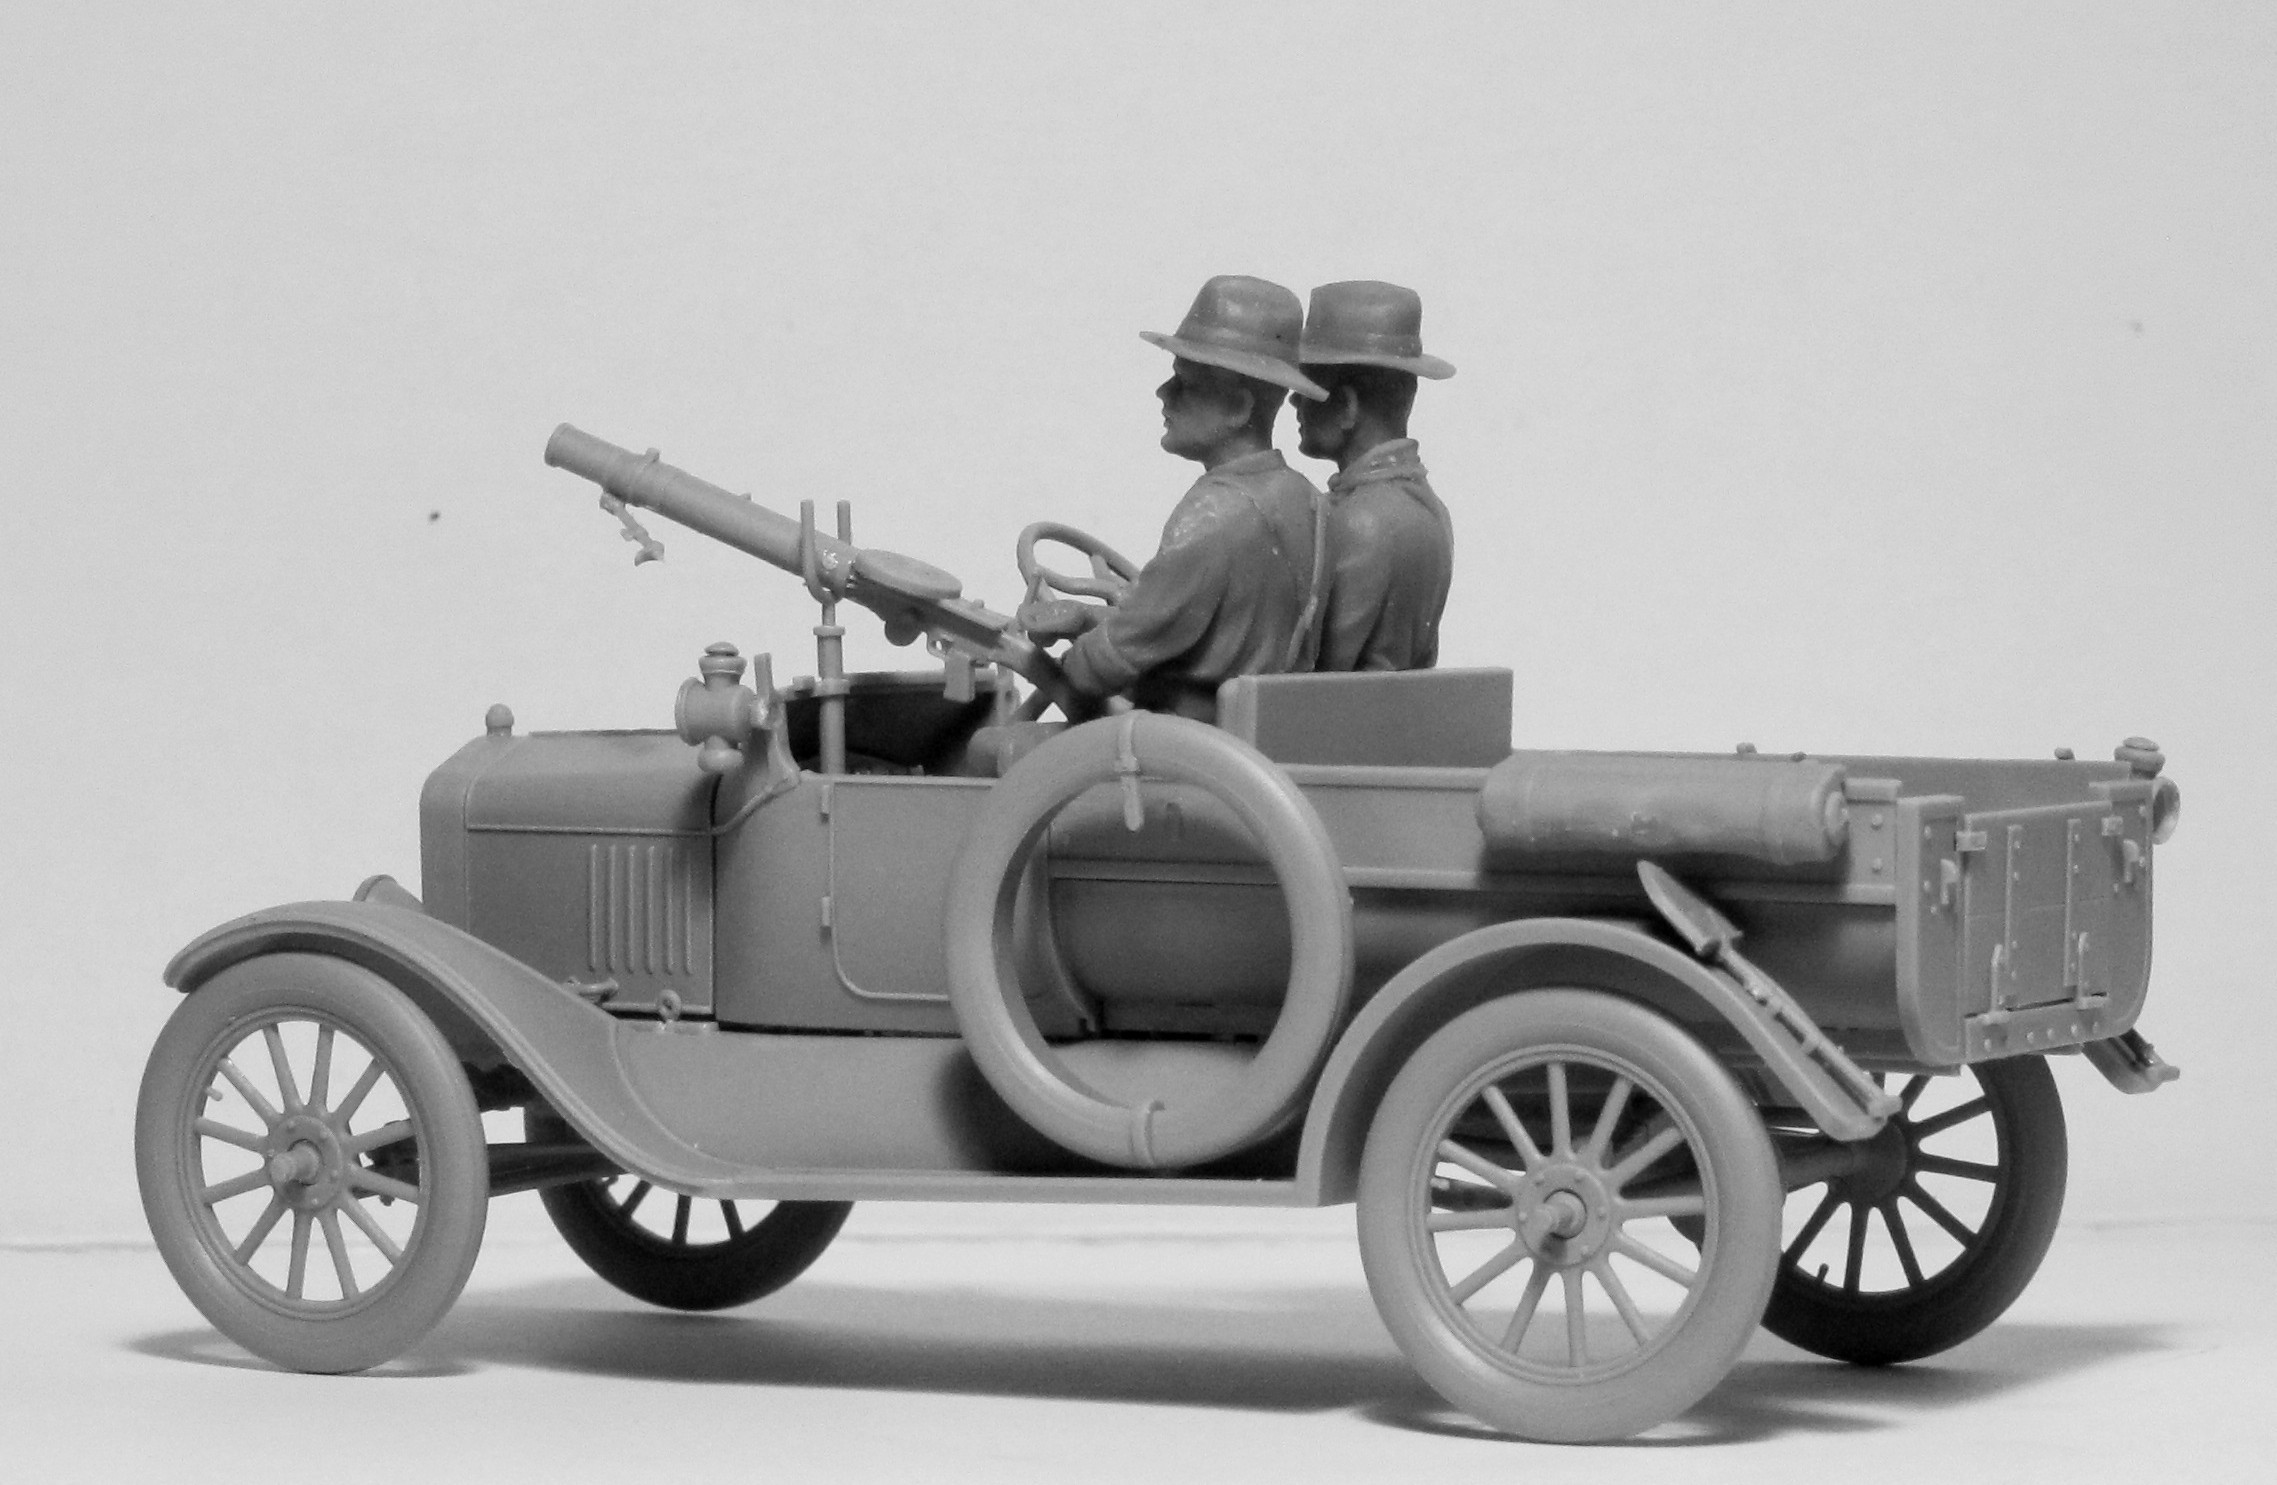 1/35 Водители АНЗАК (1917-1918 г.) #35707 / ANZAC Drivers (1917-1918) (2 figures) (100% new molds)